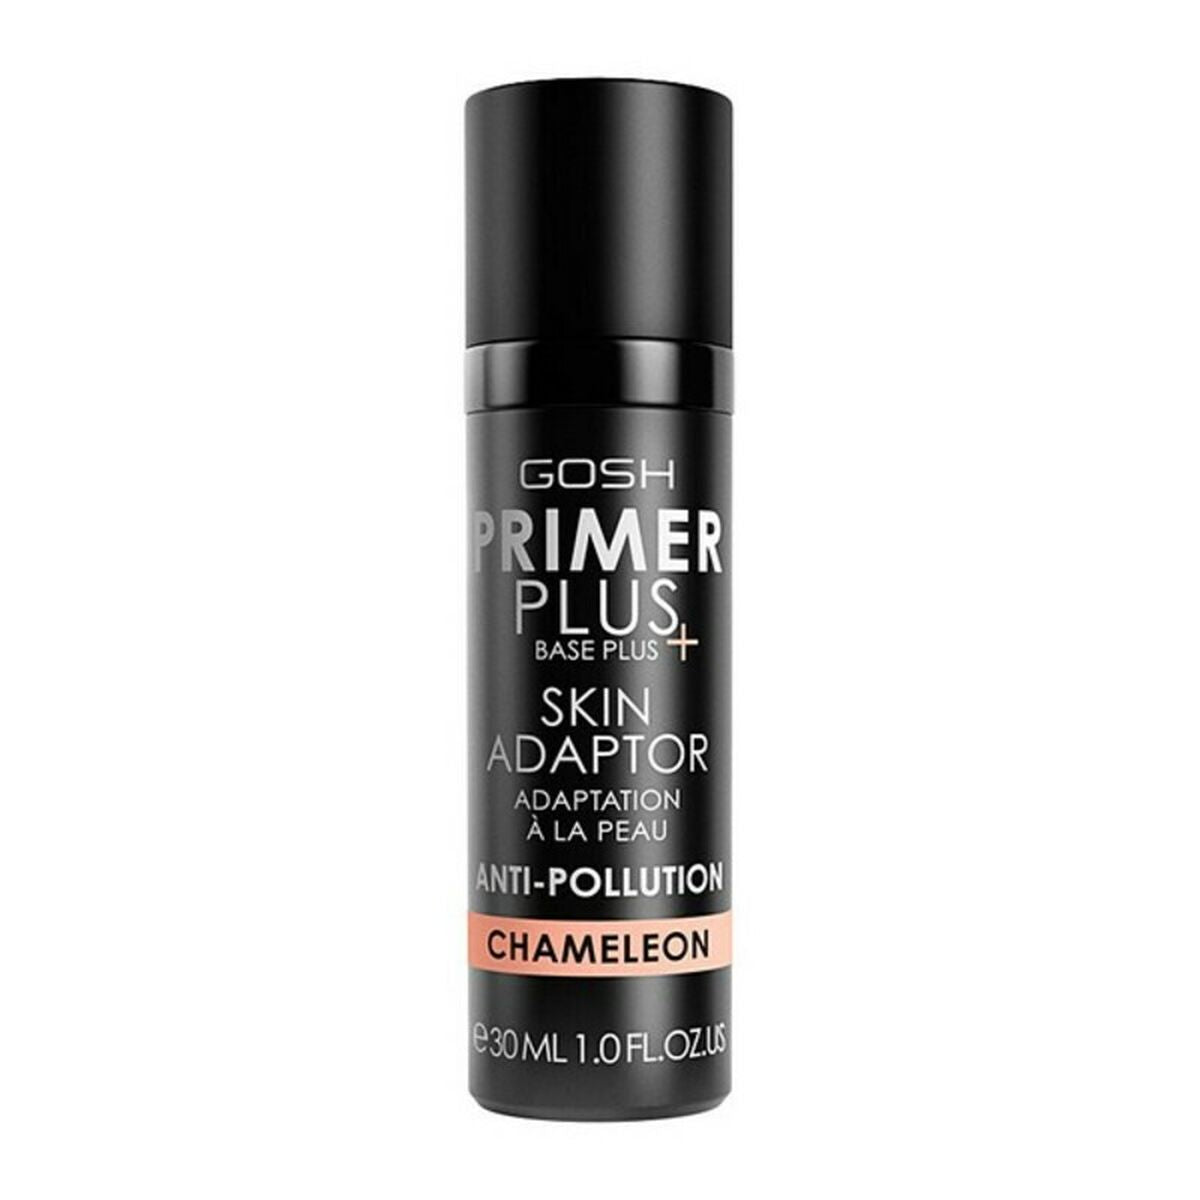 Make-up Primer Primer Plus+ Skin Adaptor Gosh Copenhagen (30 ml)-0